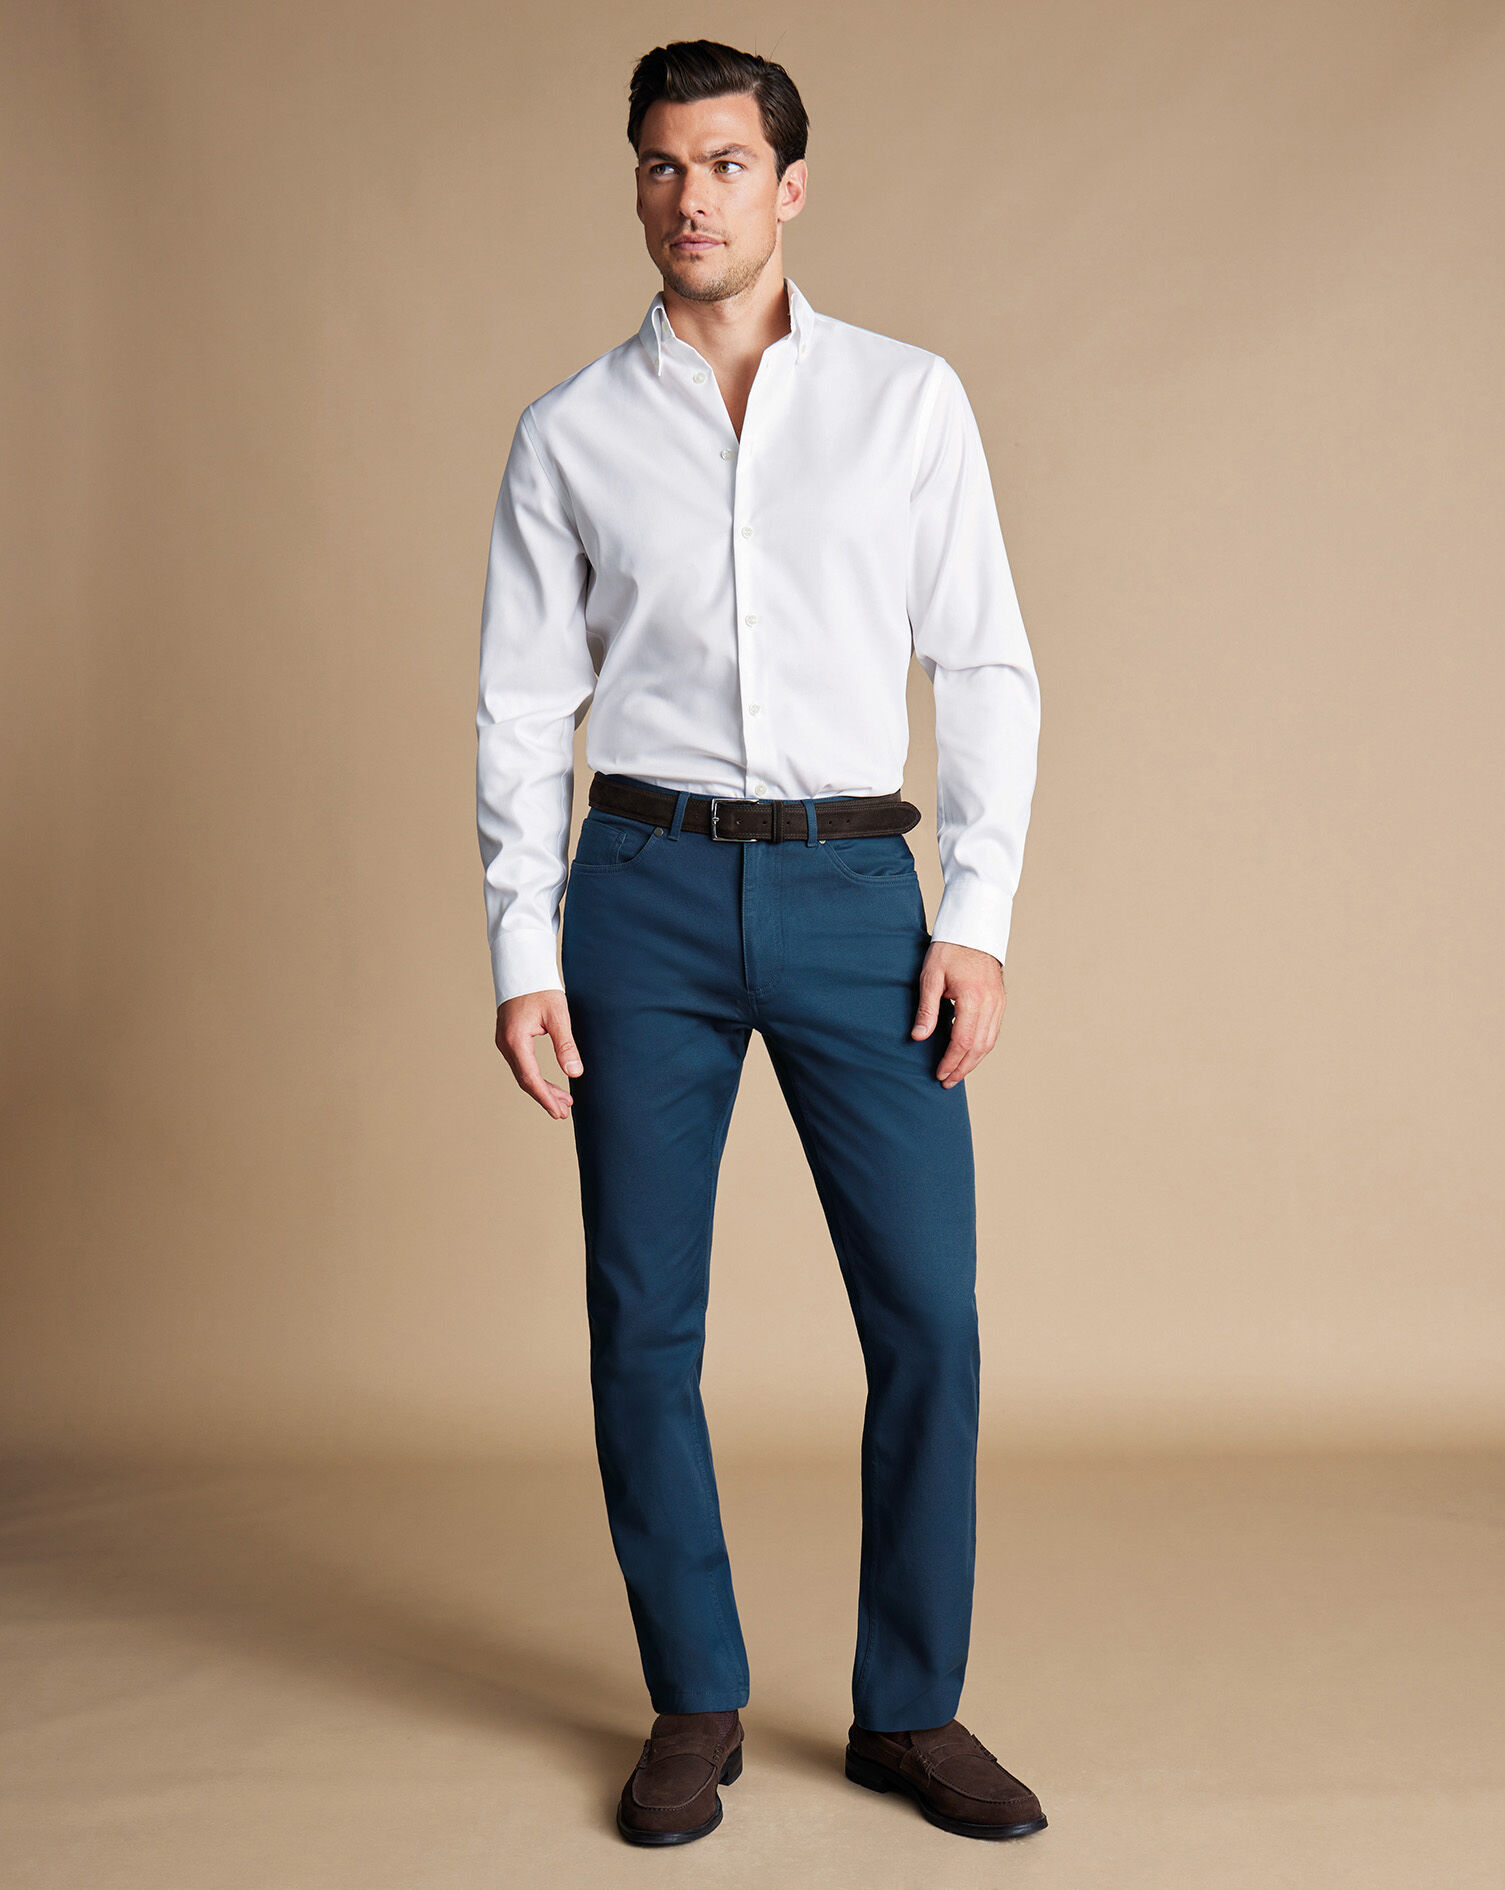 Men's Light Blue Vertical Striped Long Sleeve Shirt, Olive Dress Pants,  Burgundy Leather Watch | Lookastic